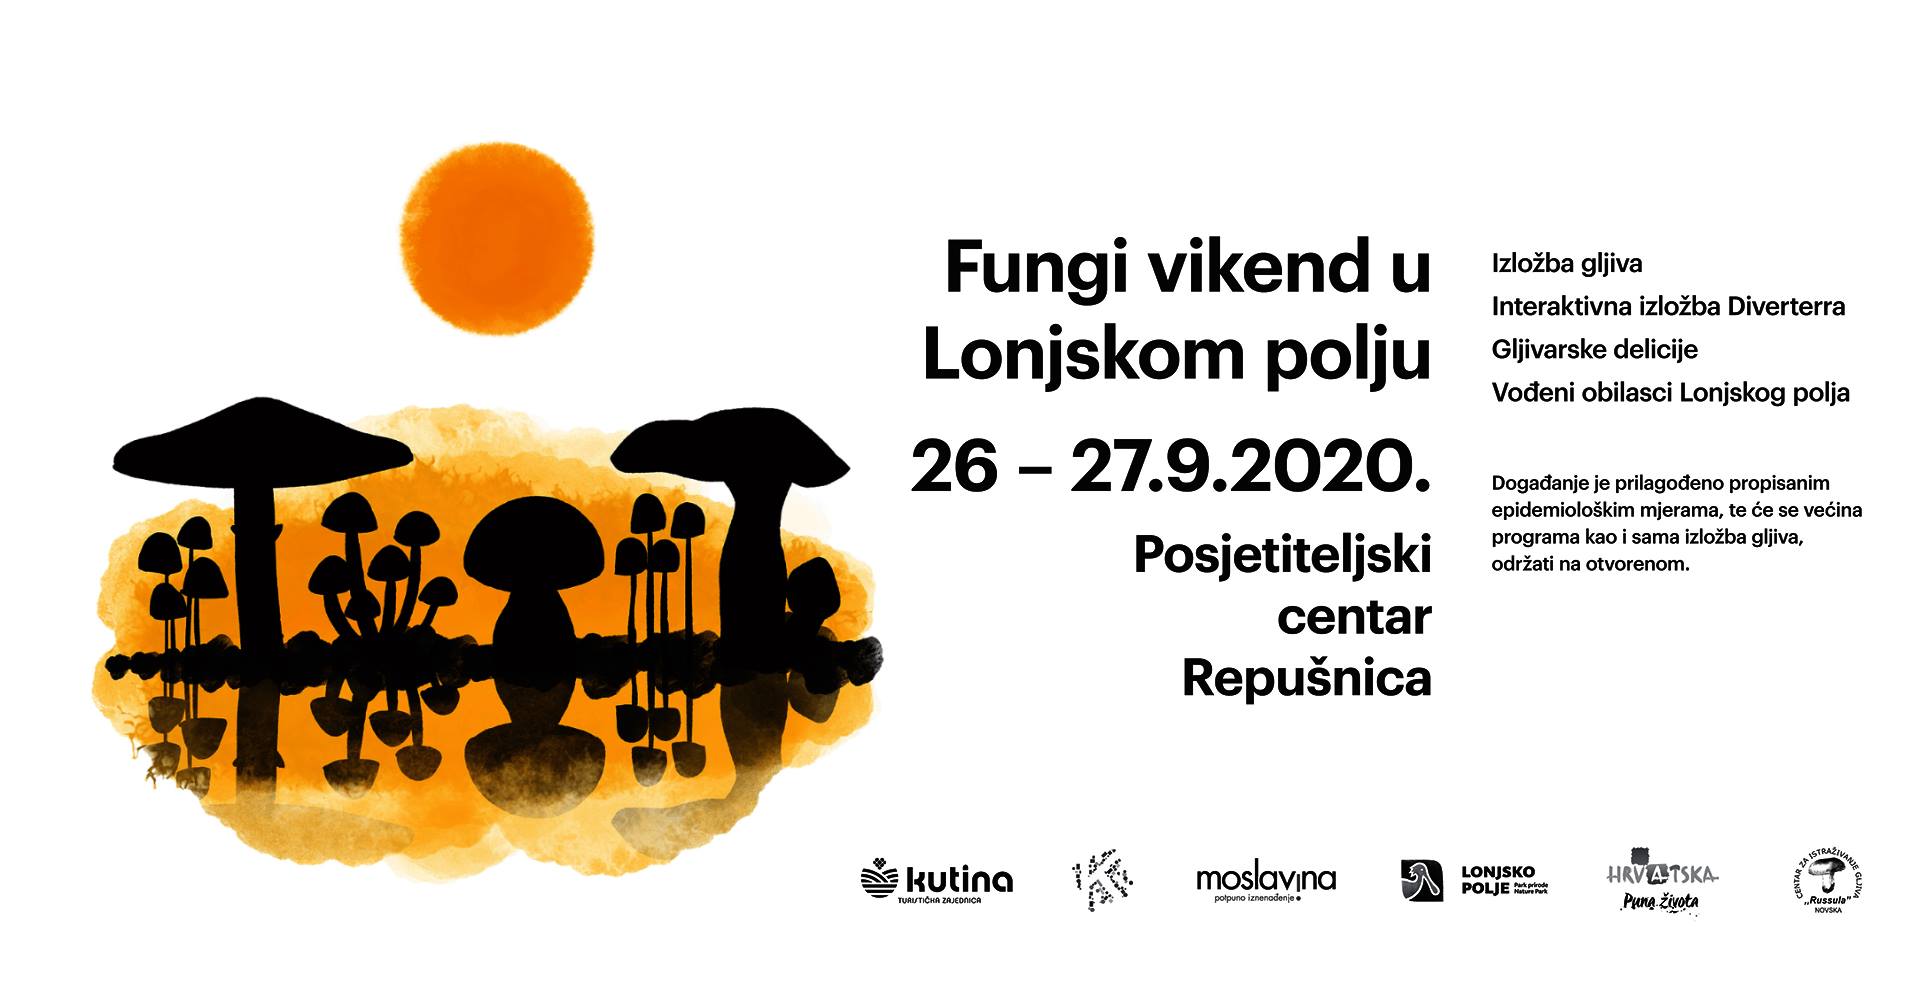 You are currently viewing Fungi vikend u Lonjskom polju 2020.